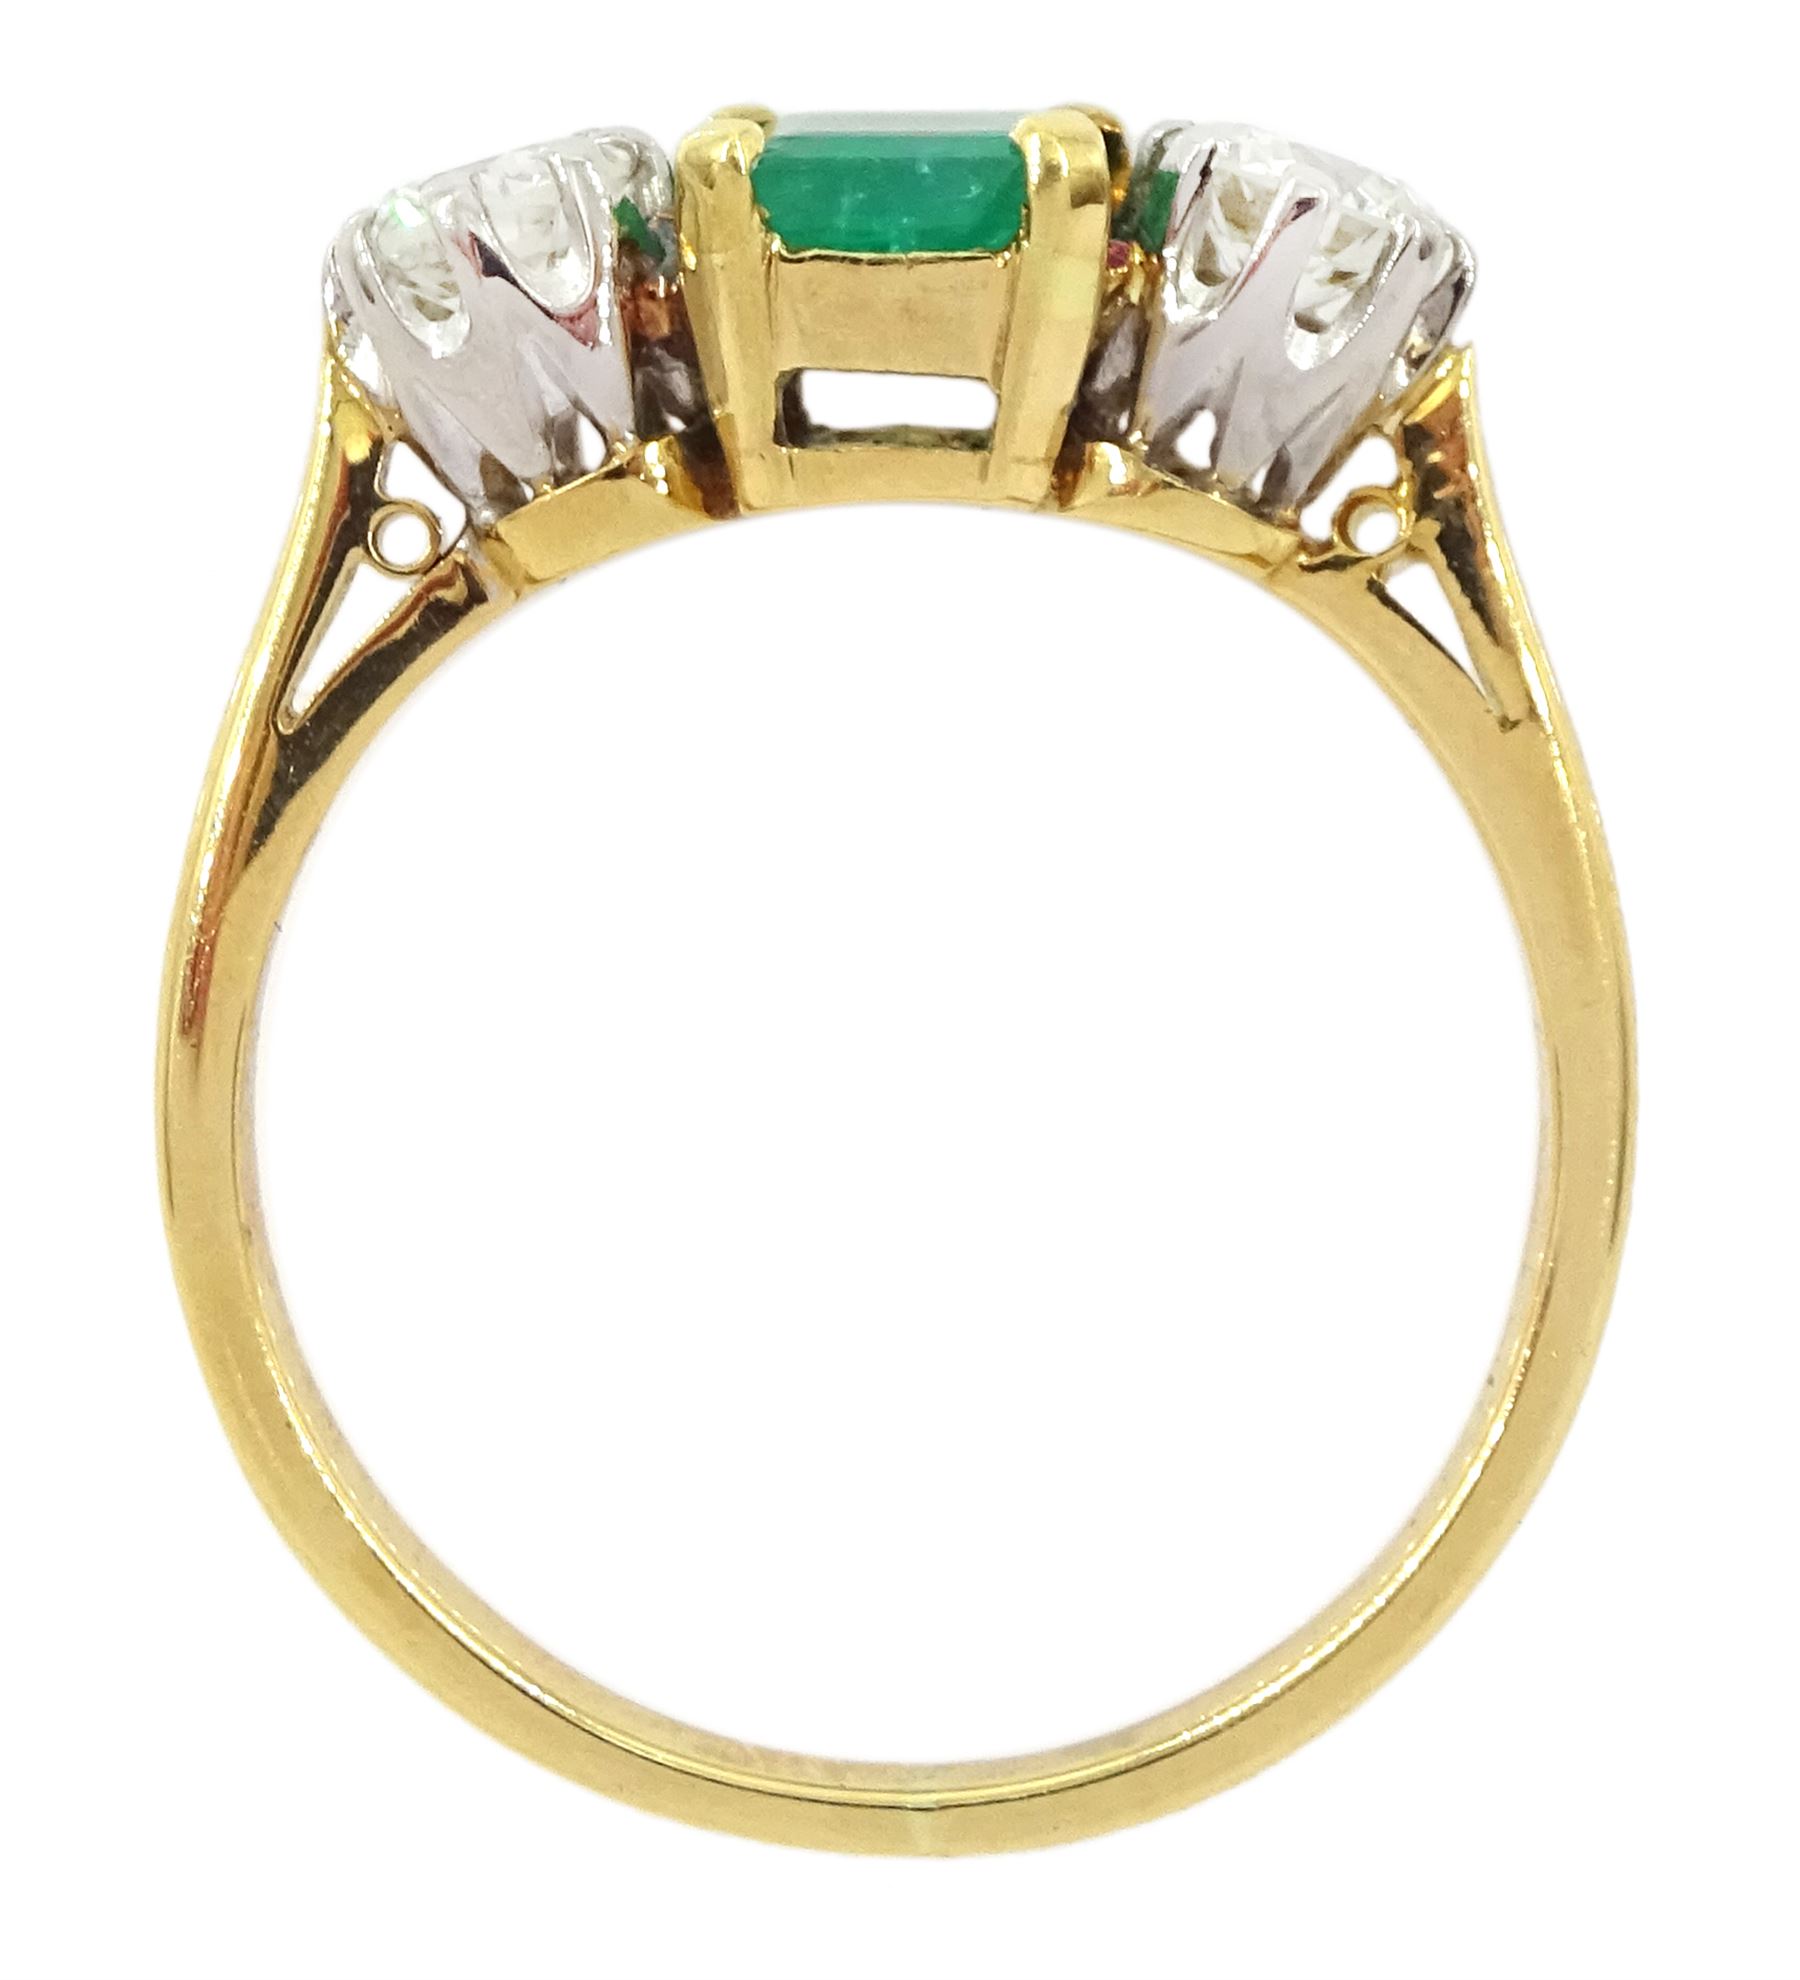 18ct gold three stone emerald and round brilliant cut diamond ring - Image 4 of 4